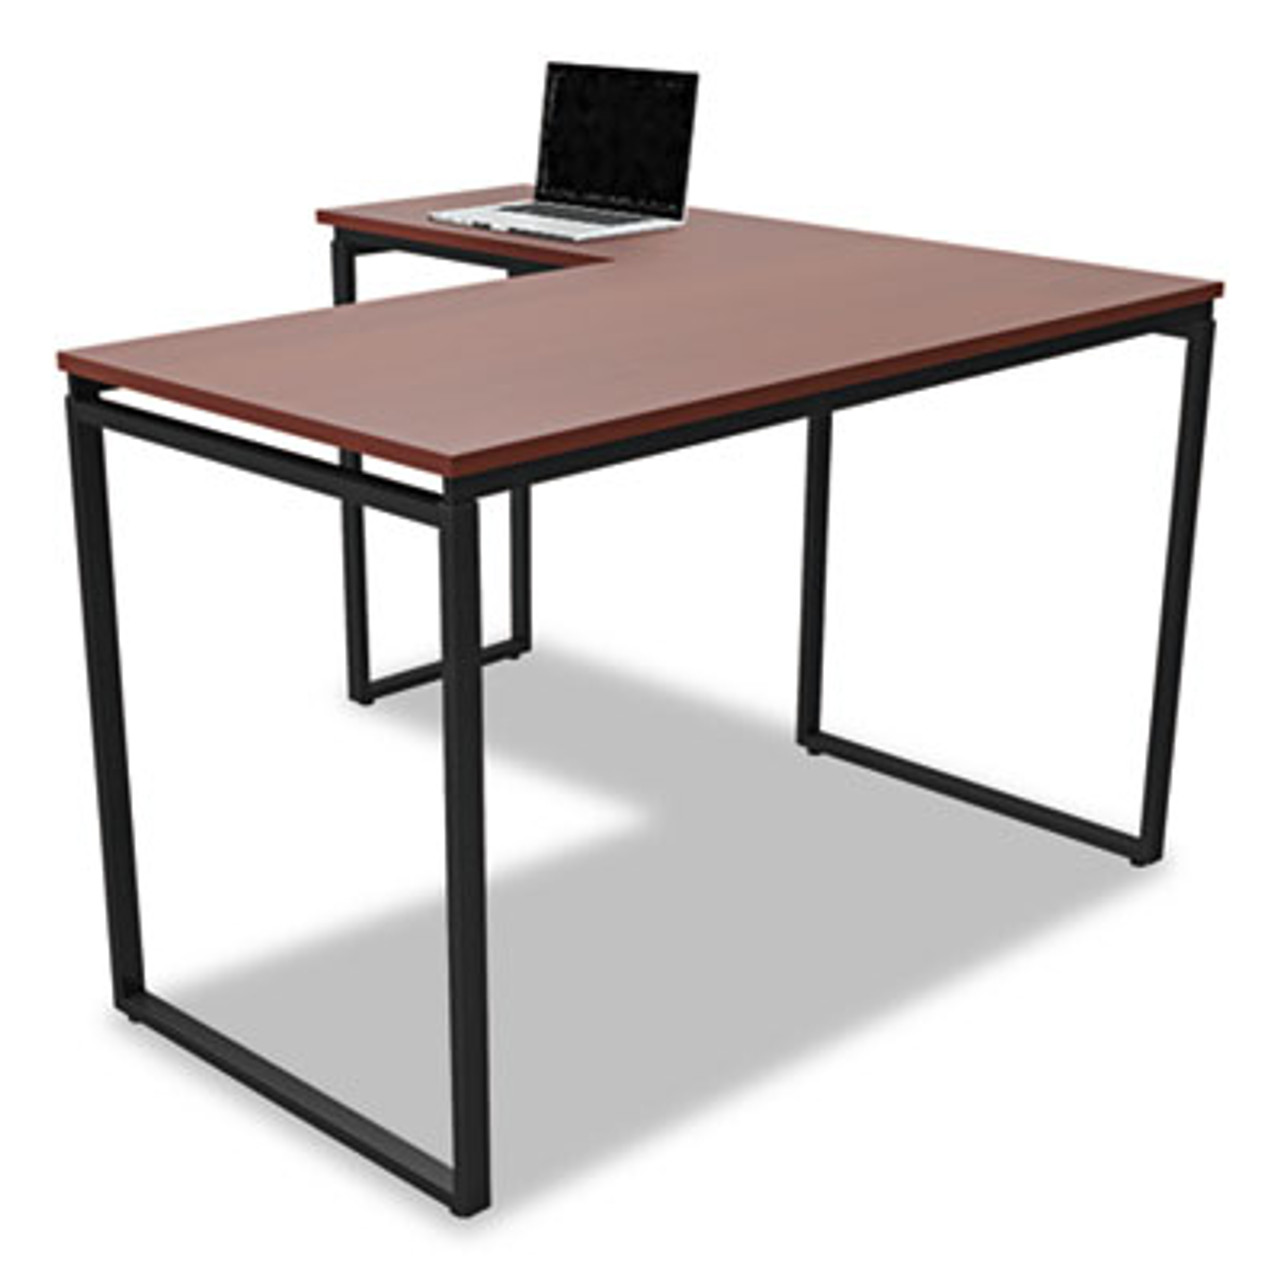 Seven Series L-Shaped Desk, 60 x 60 x 29 1/2, Cherry